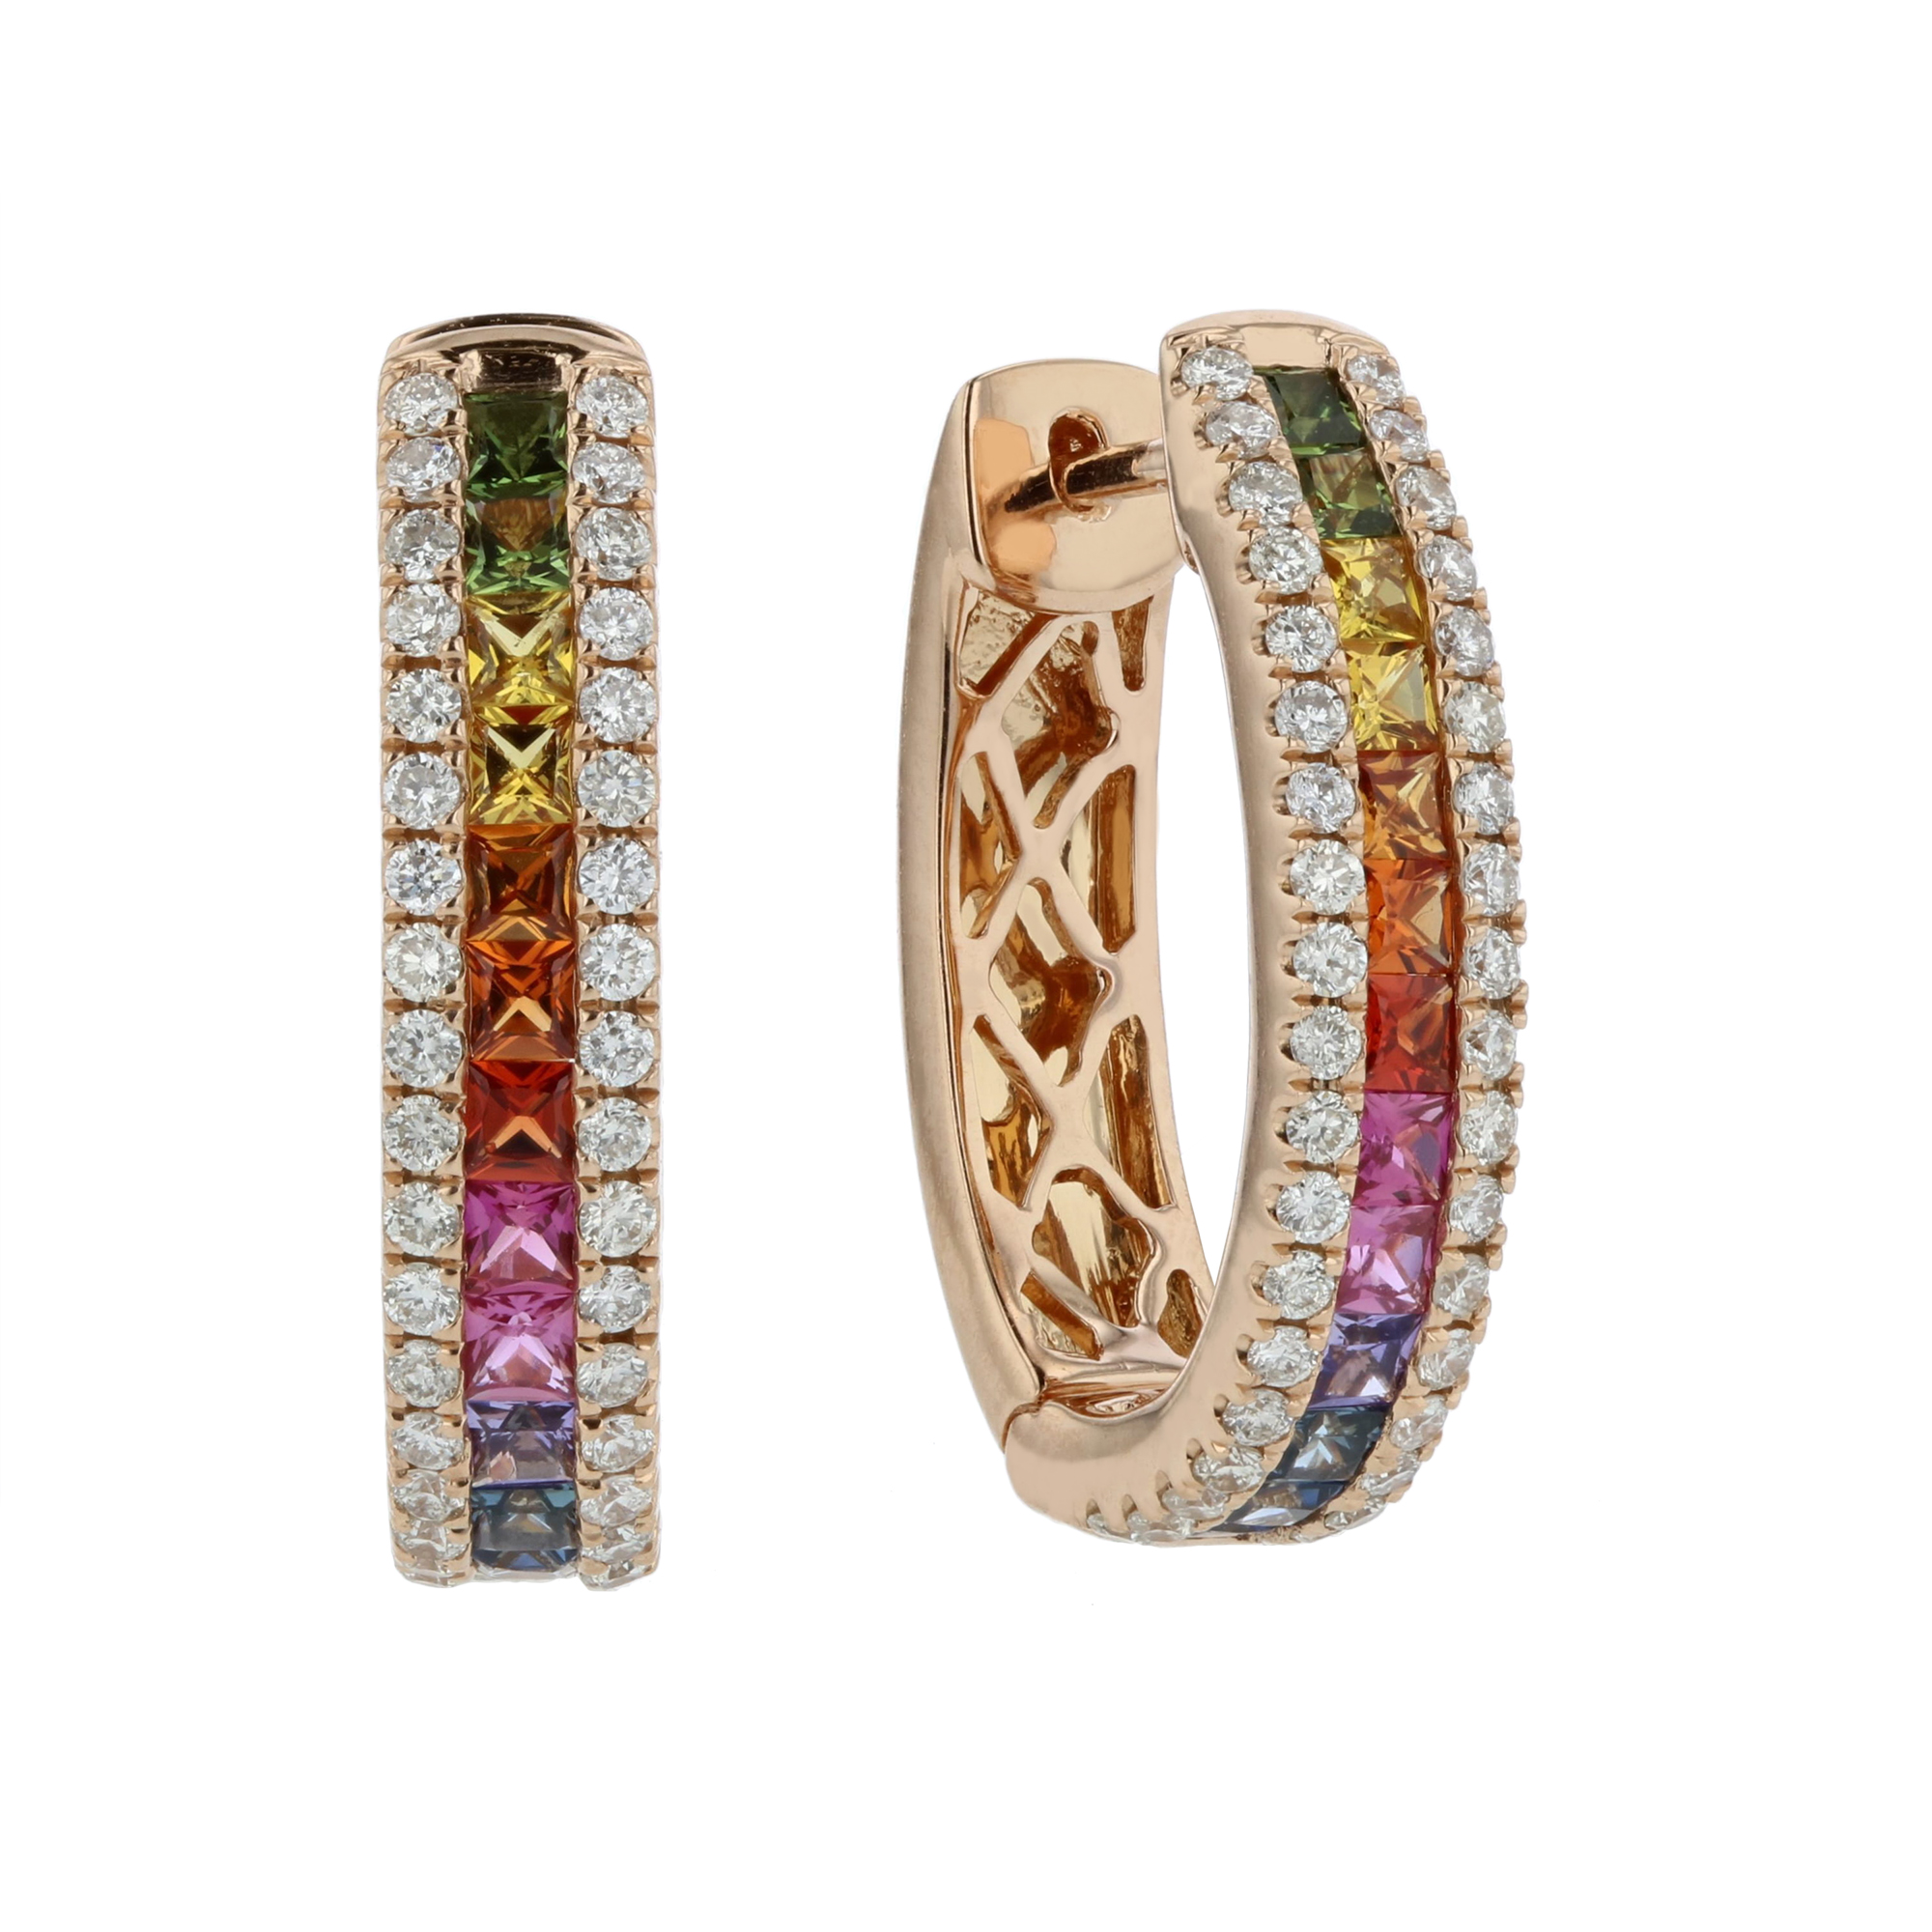 View 1.56ctw Diamond and Multi Sapphire Hoop Earrings in 18k Rose Gold